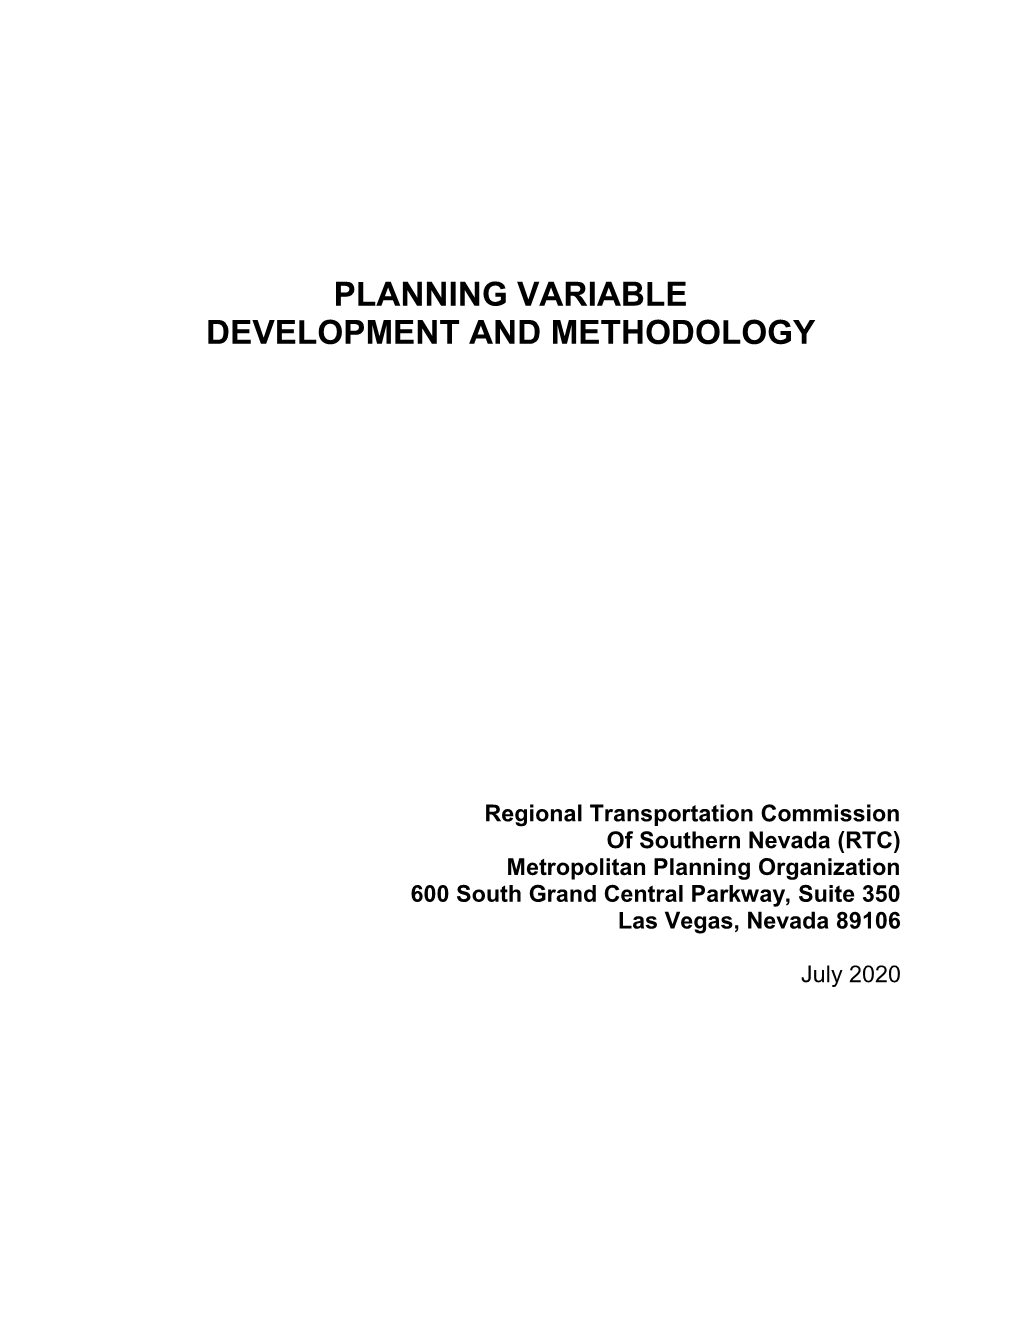 Planning Variable Development and Methodology